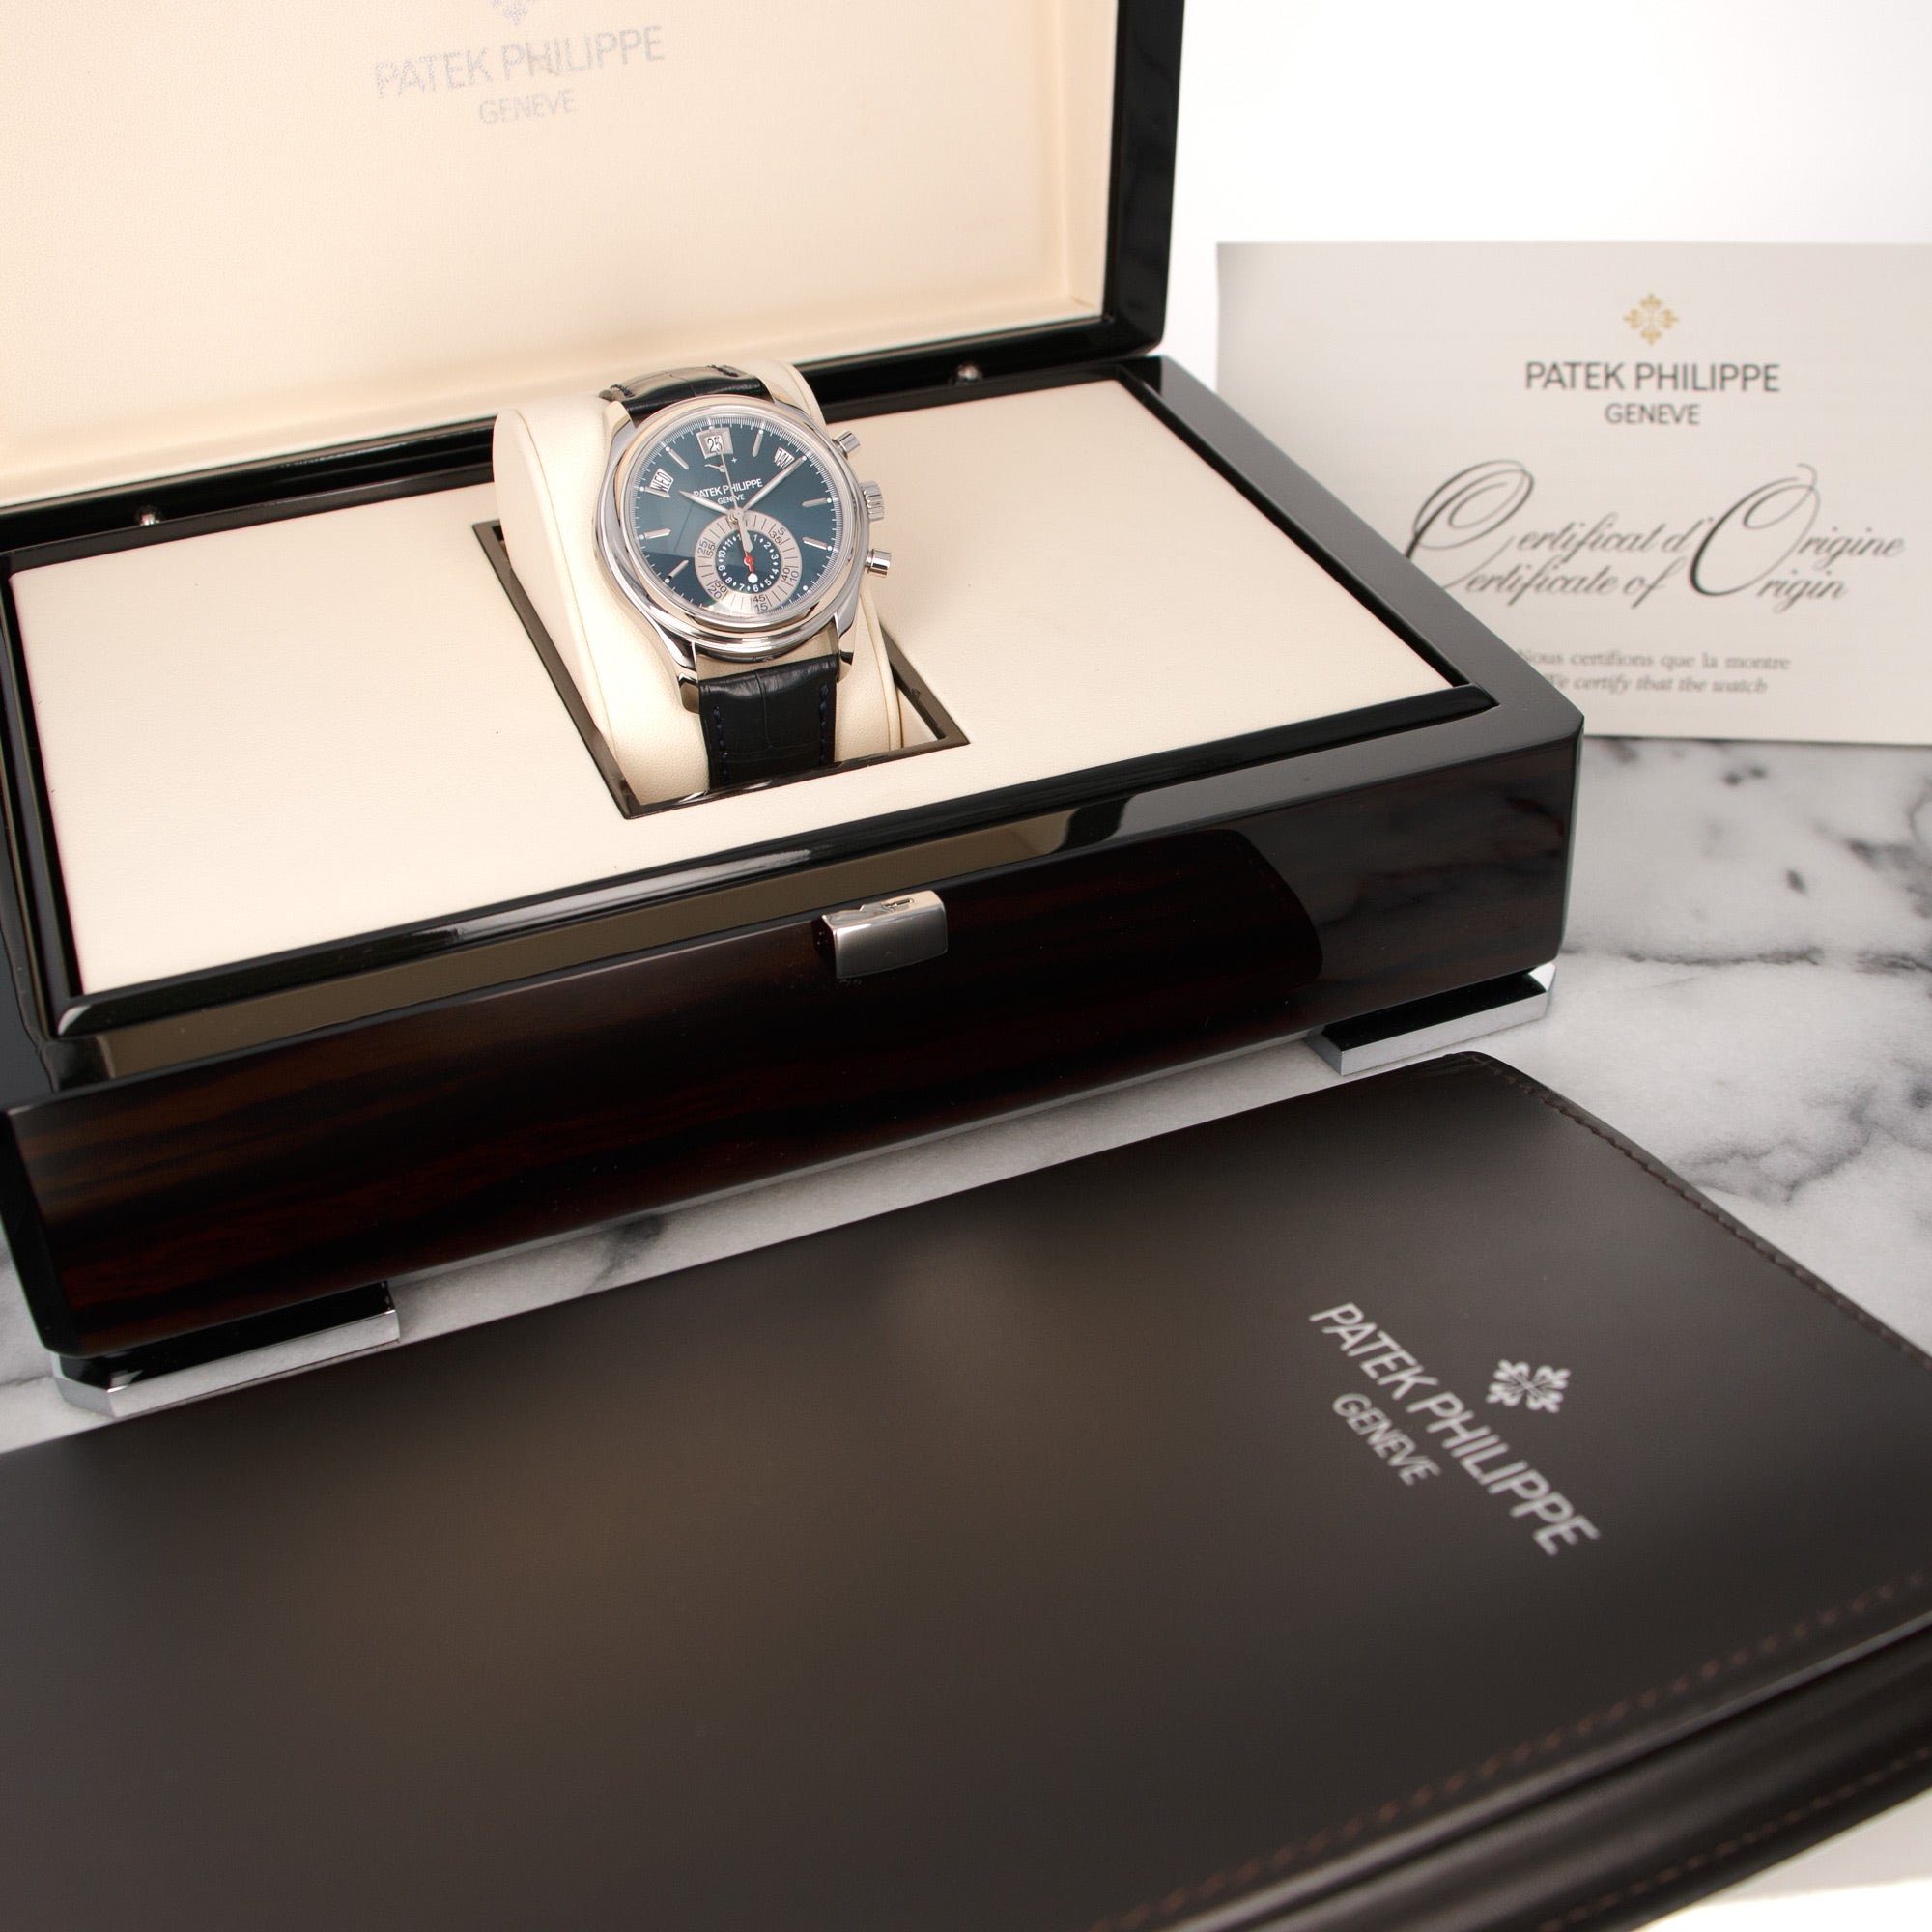 Patek Philippe - Patek Philippe Platinum Annual Calendar Chronograph Watch Ref. 5960 - The Keystone Watches